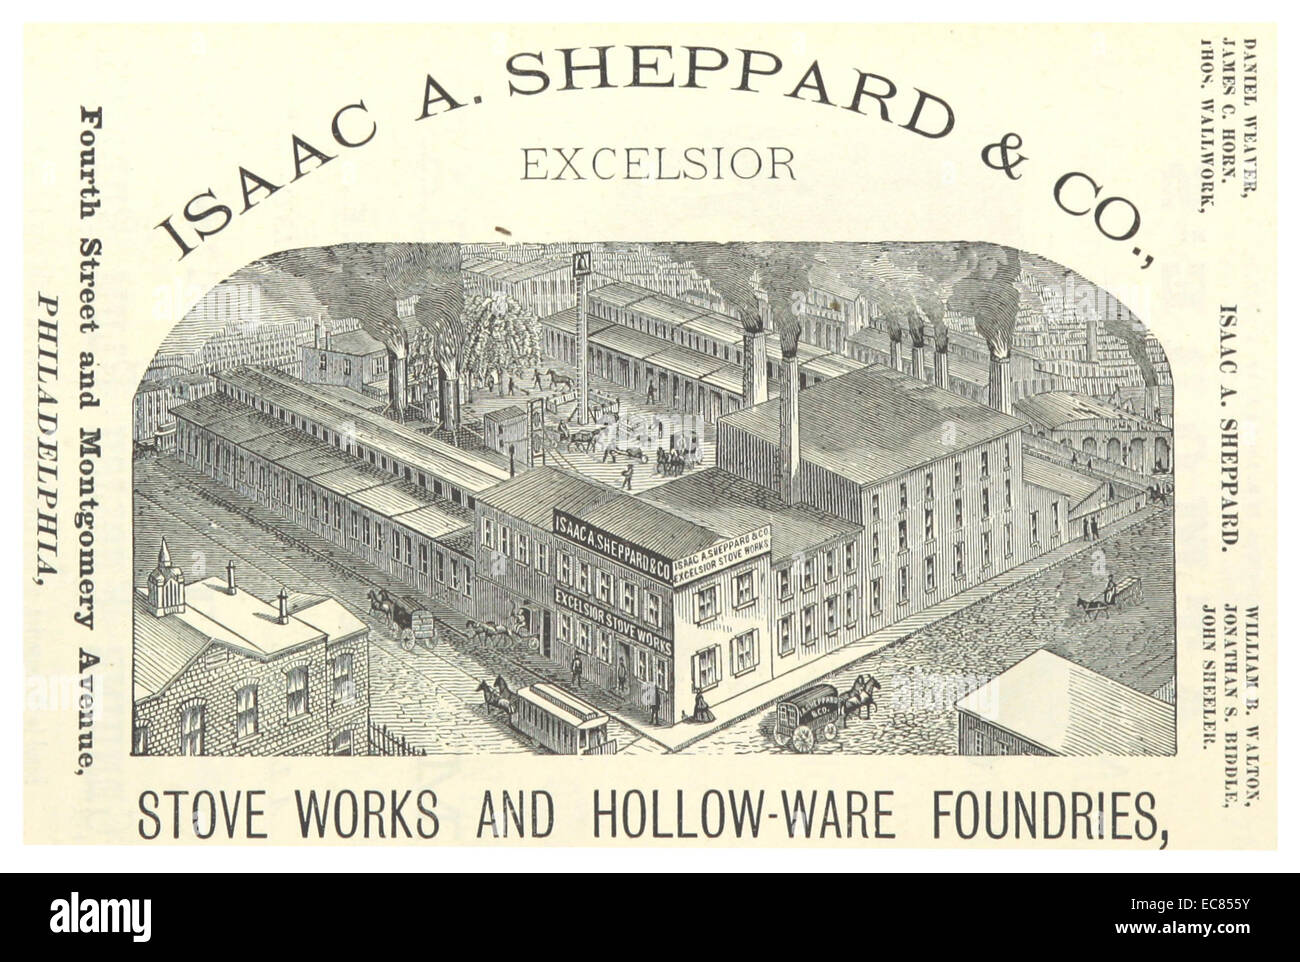 (1876Exhib) p694 - Philadelphia, SHEPPARD & CO Stock Photo